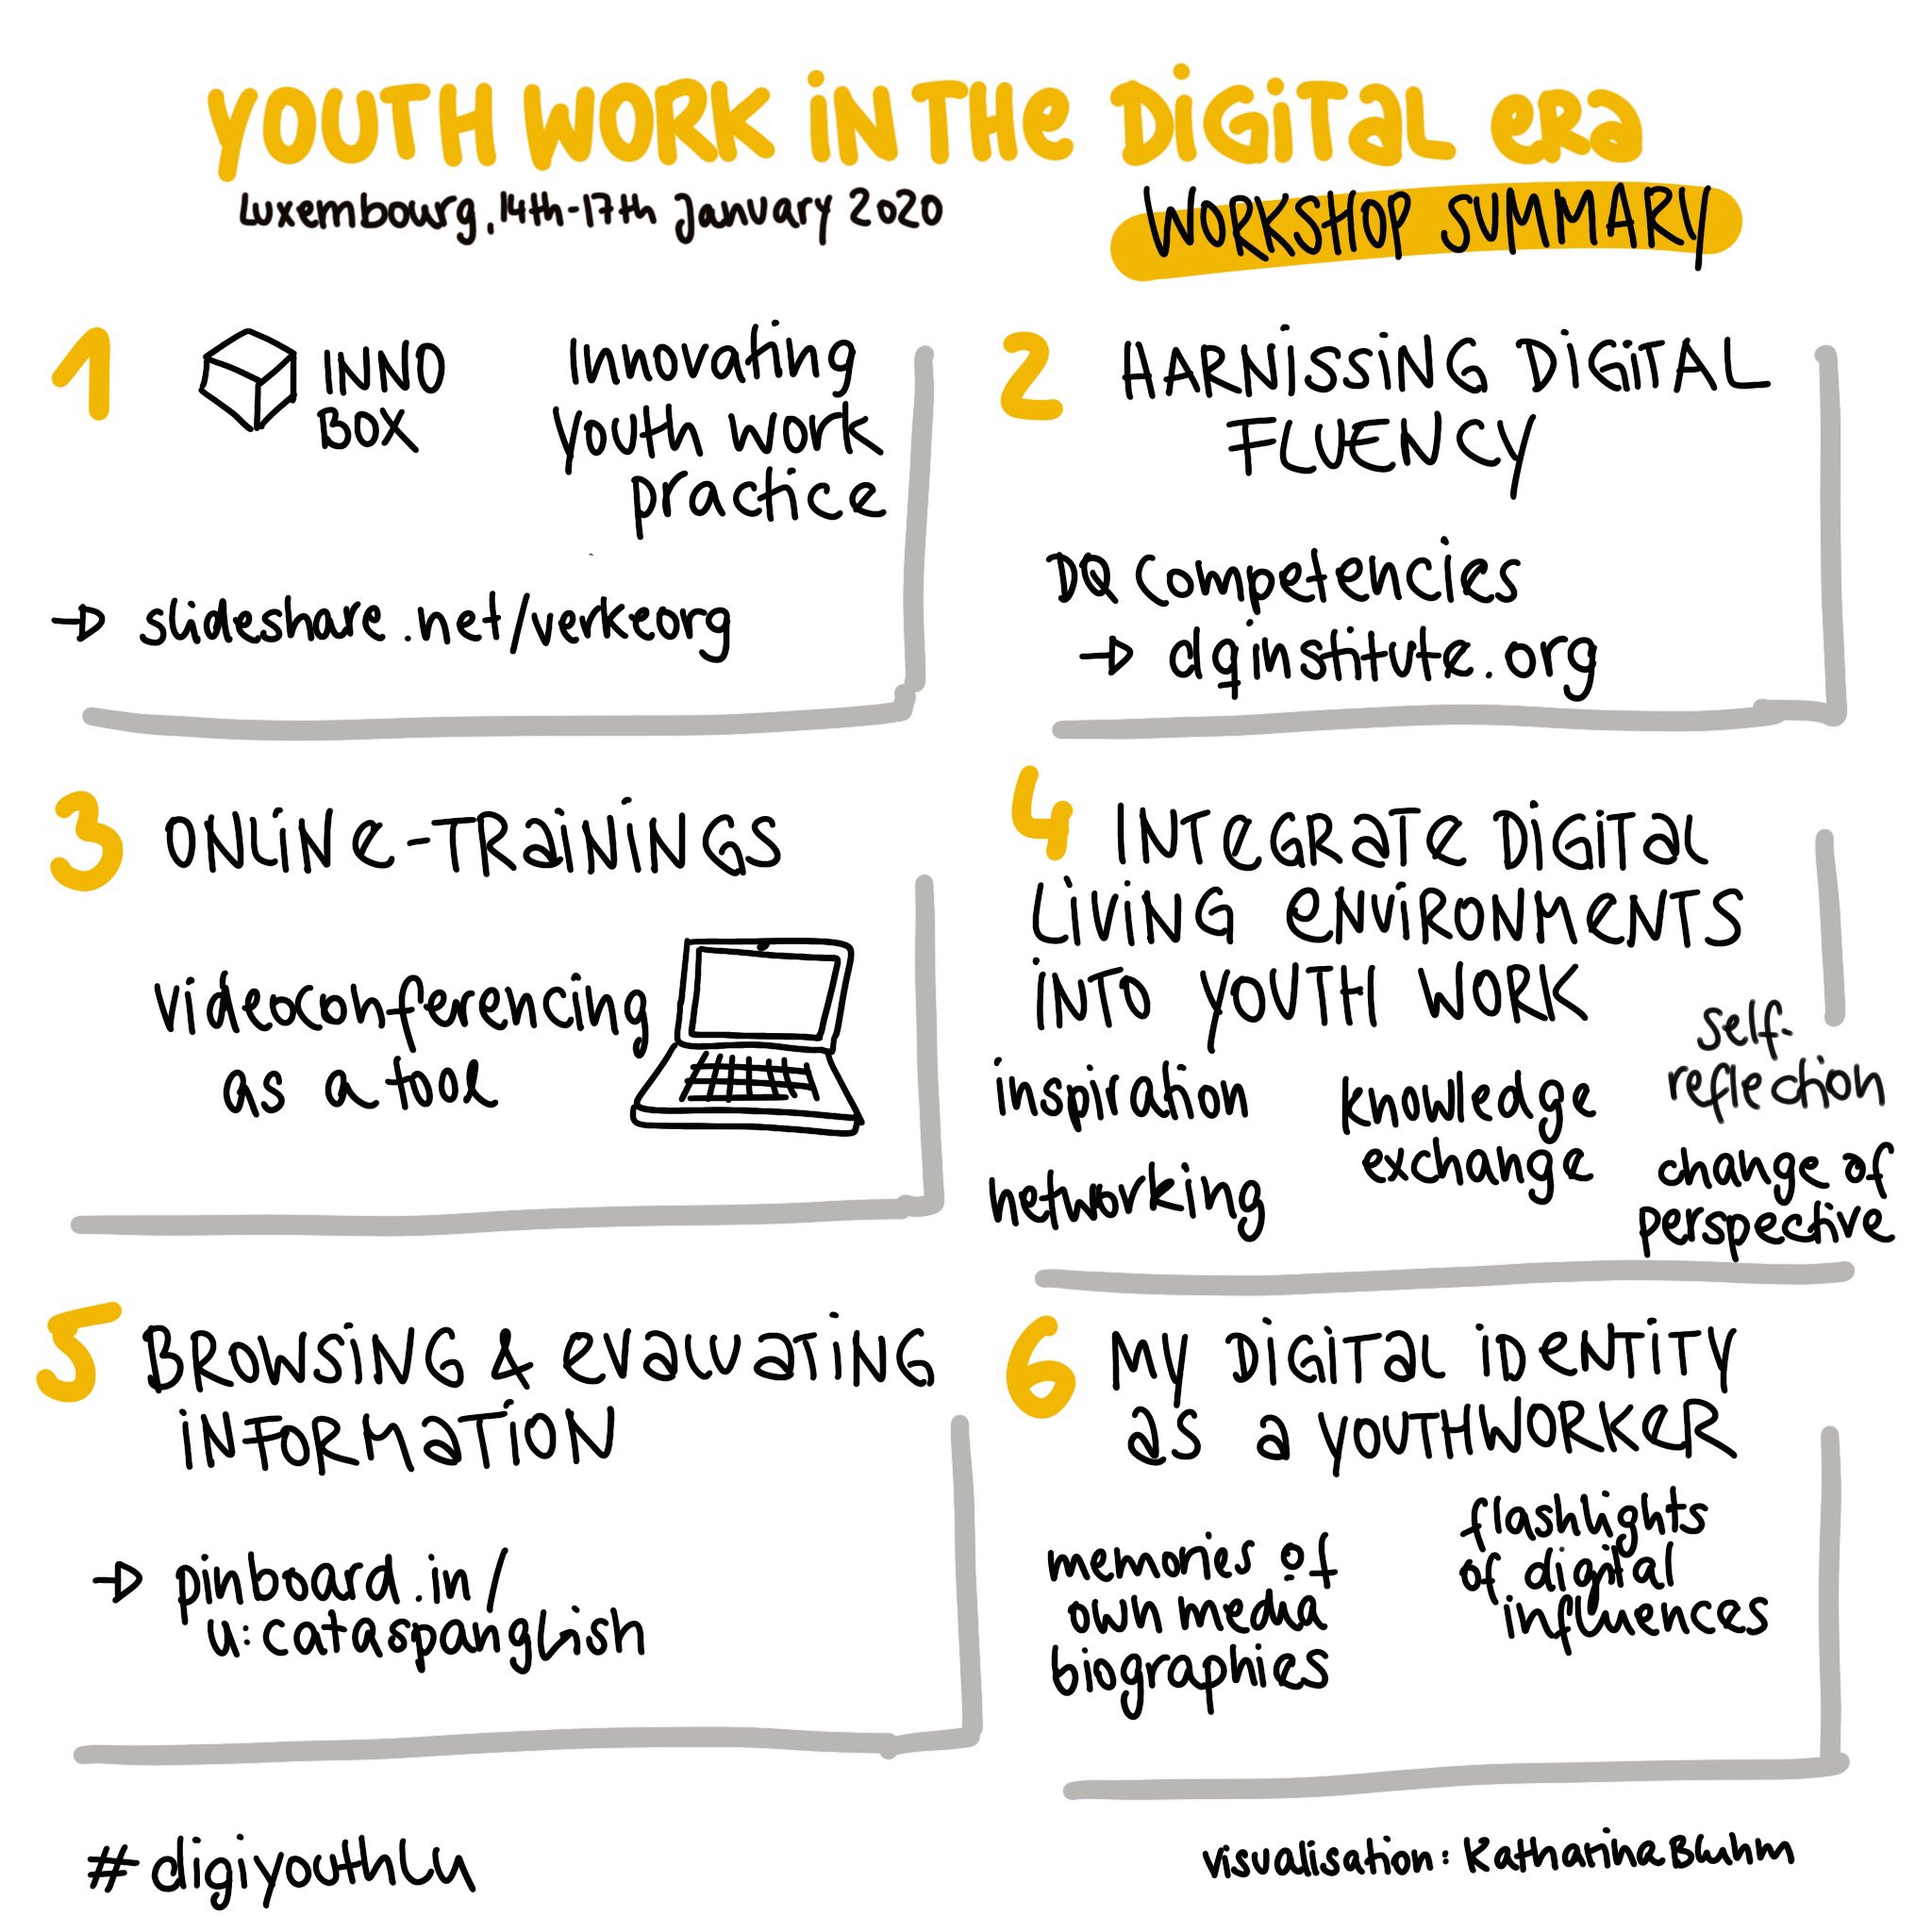 Youth work in digital era workshop